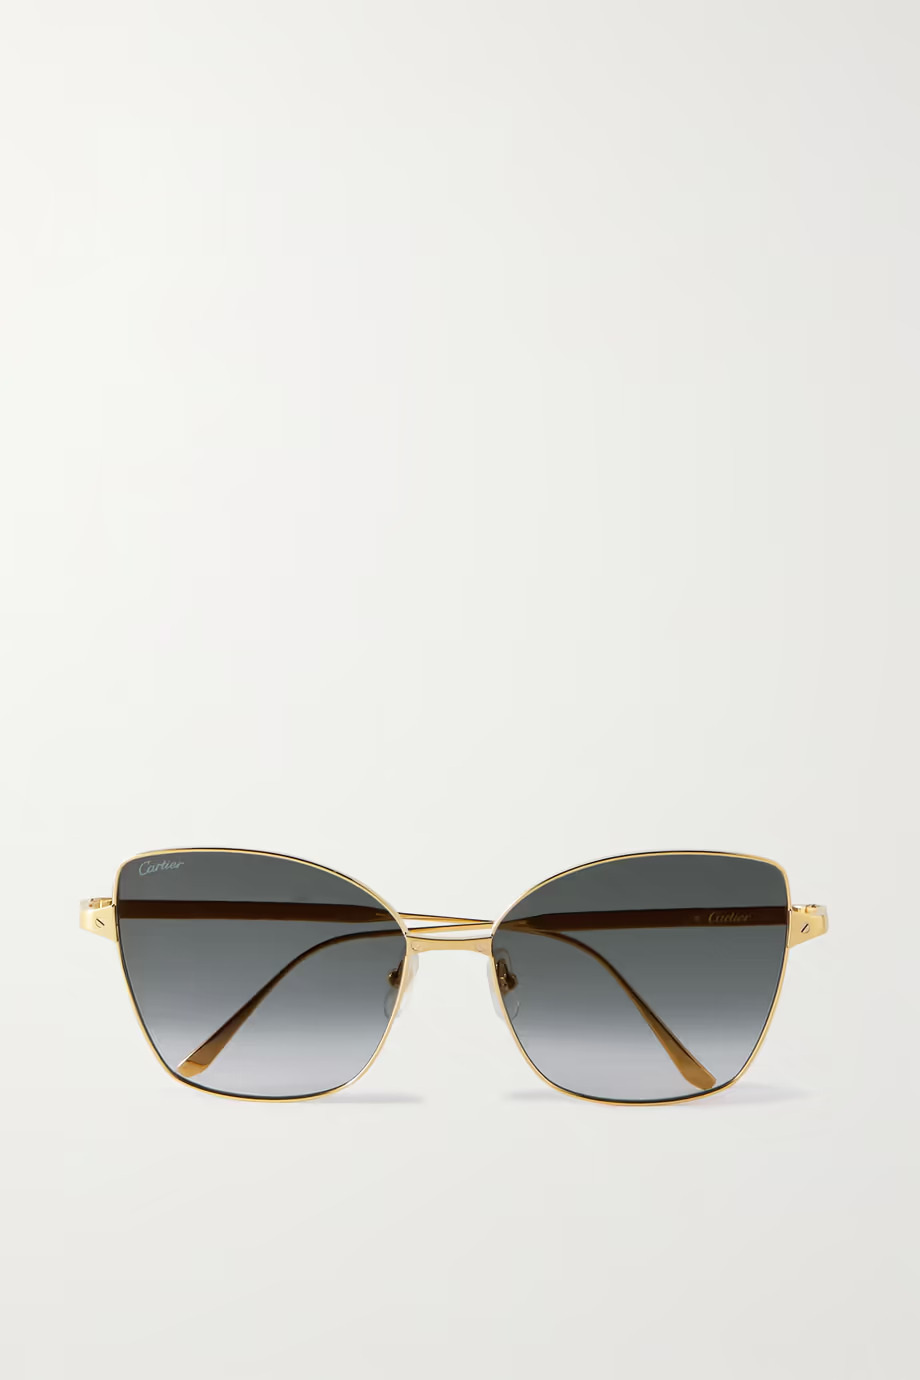 Santos de Cartier cat-eye gold-tone sunglasses from Cartier 